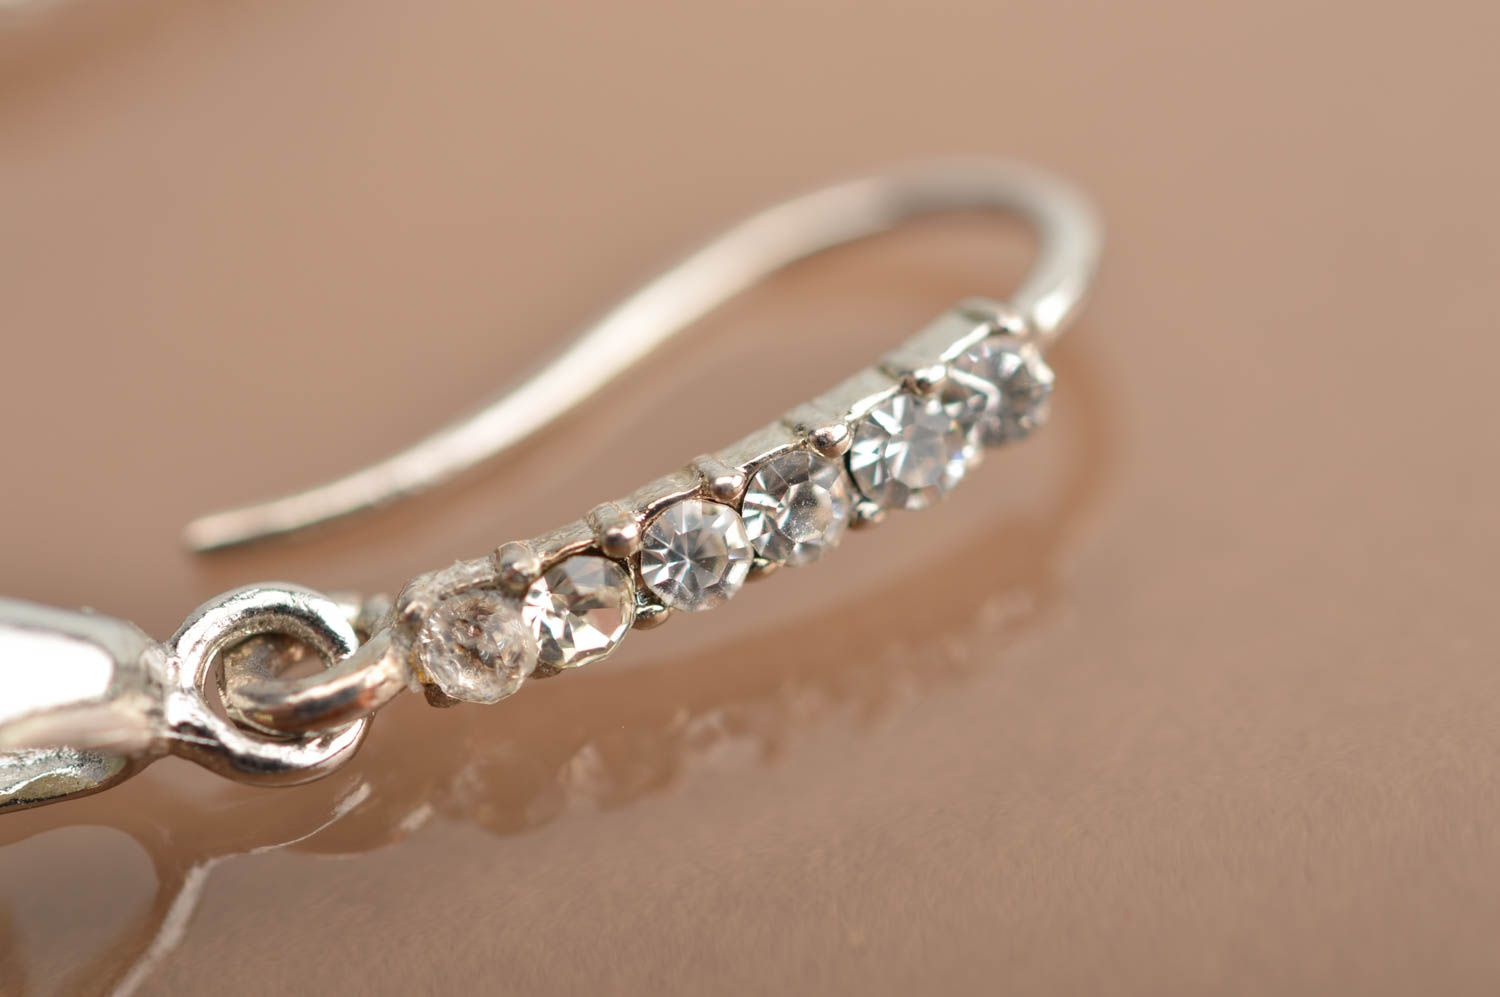 Handmade jewelry Austrian crystals earrings  teardrop - shaped accessories photo 4